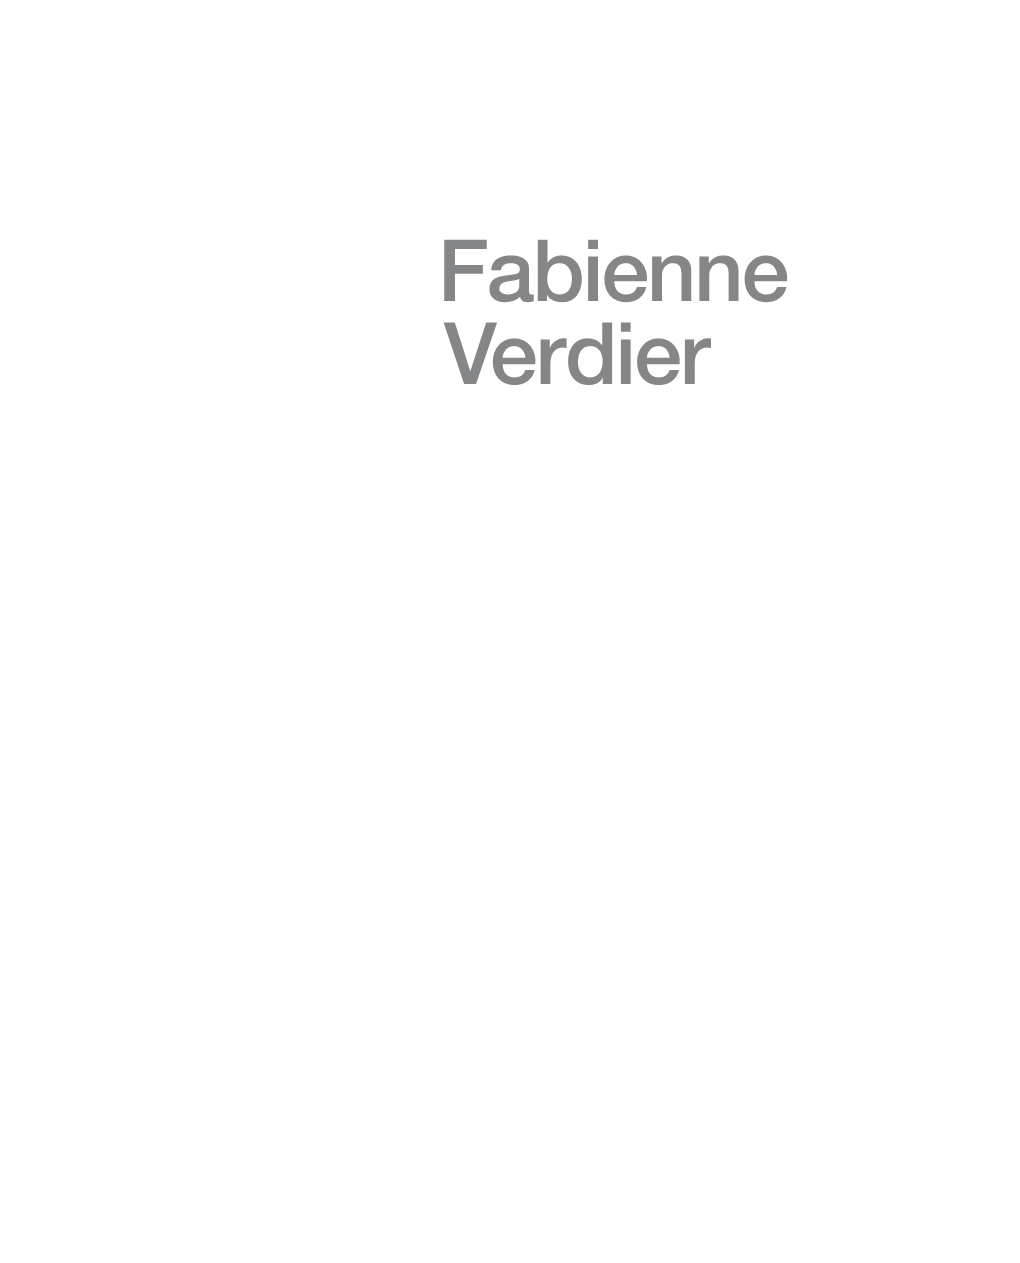 Fabienne Verdier Introduction Contents Fabienne Verdier in Conversation with Michael Peppiatt 6-13